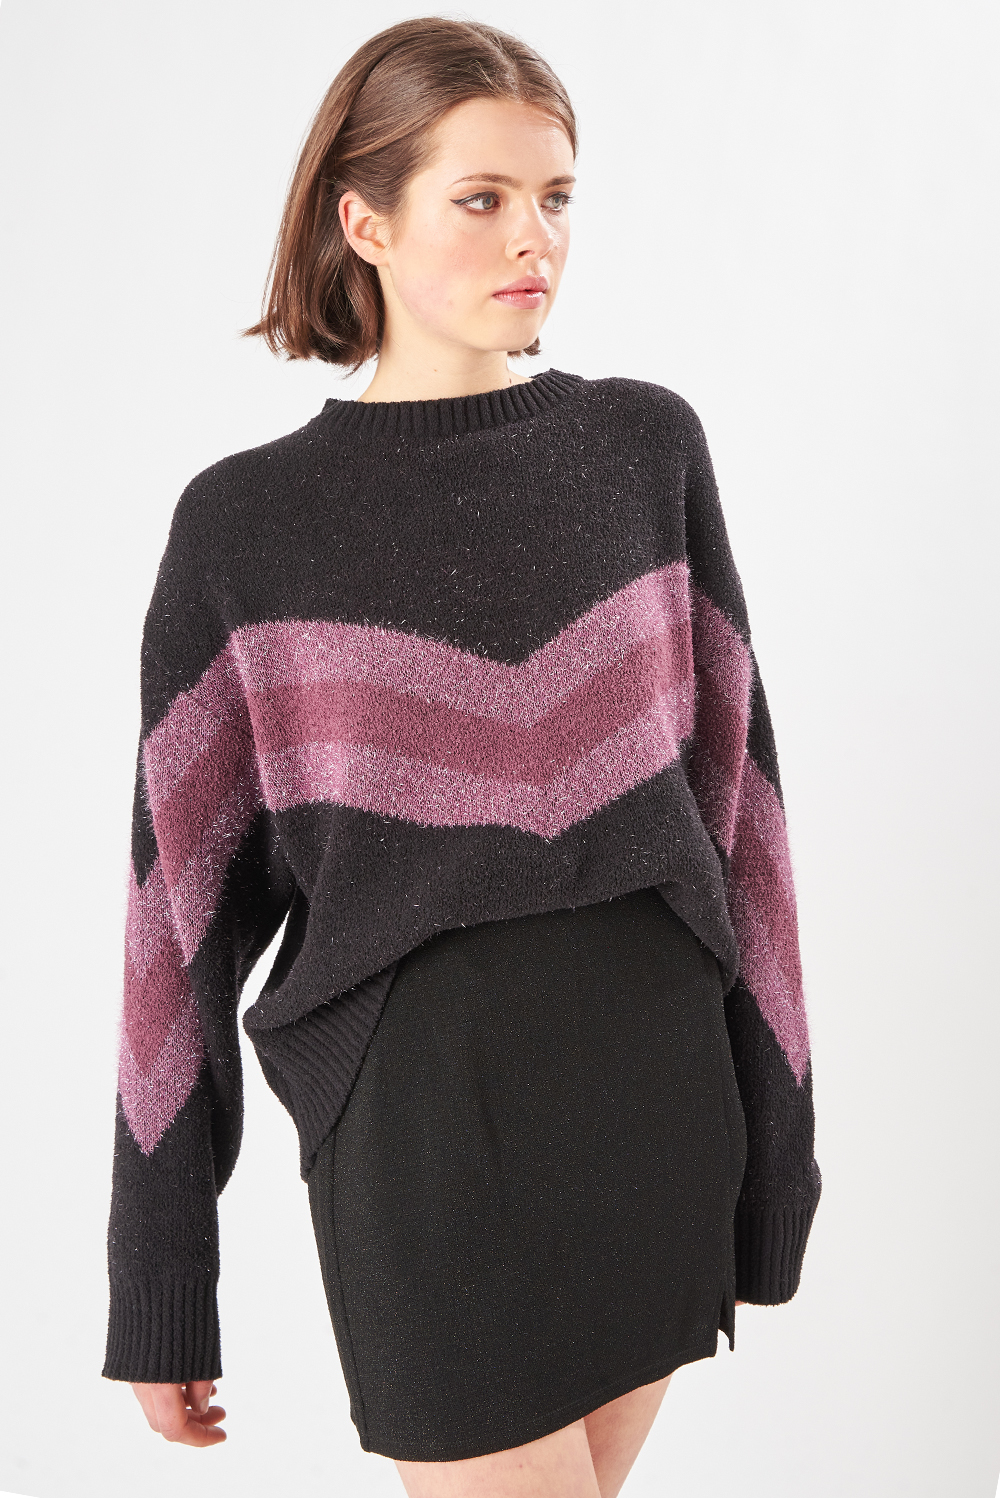 24Colours Sweater Black Purple Glitter